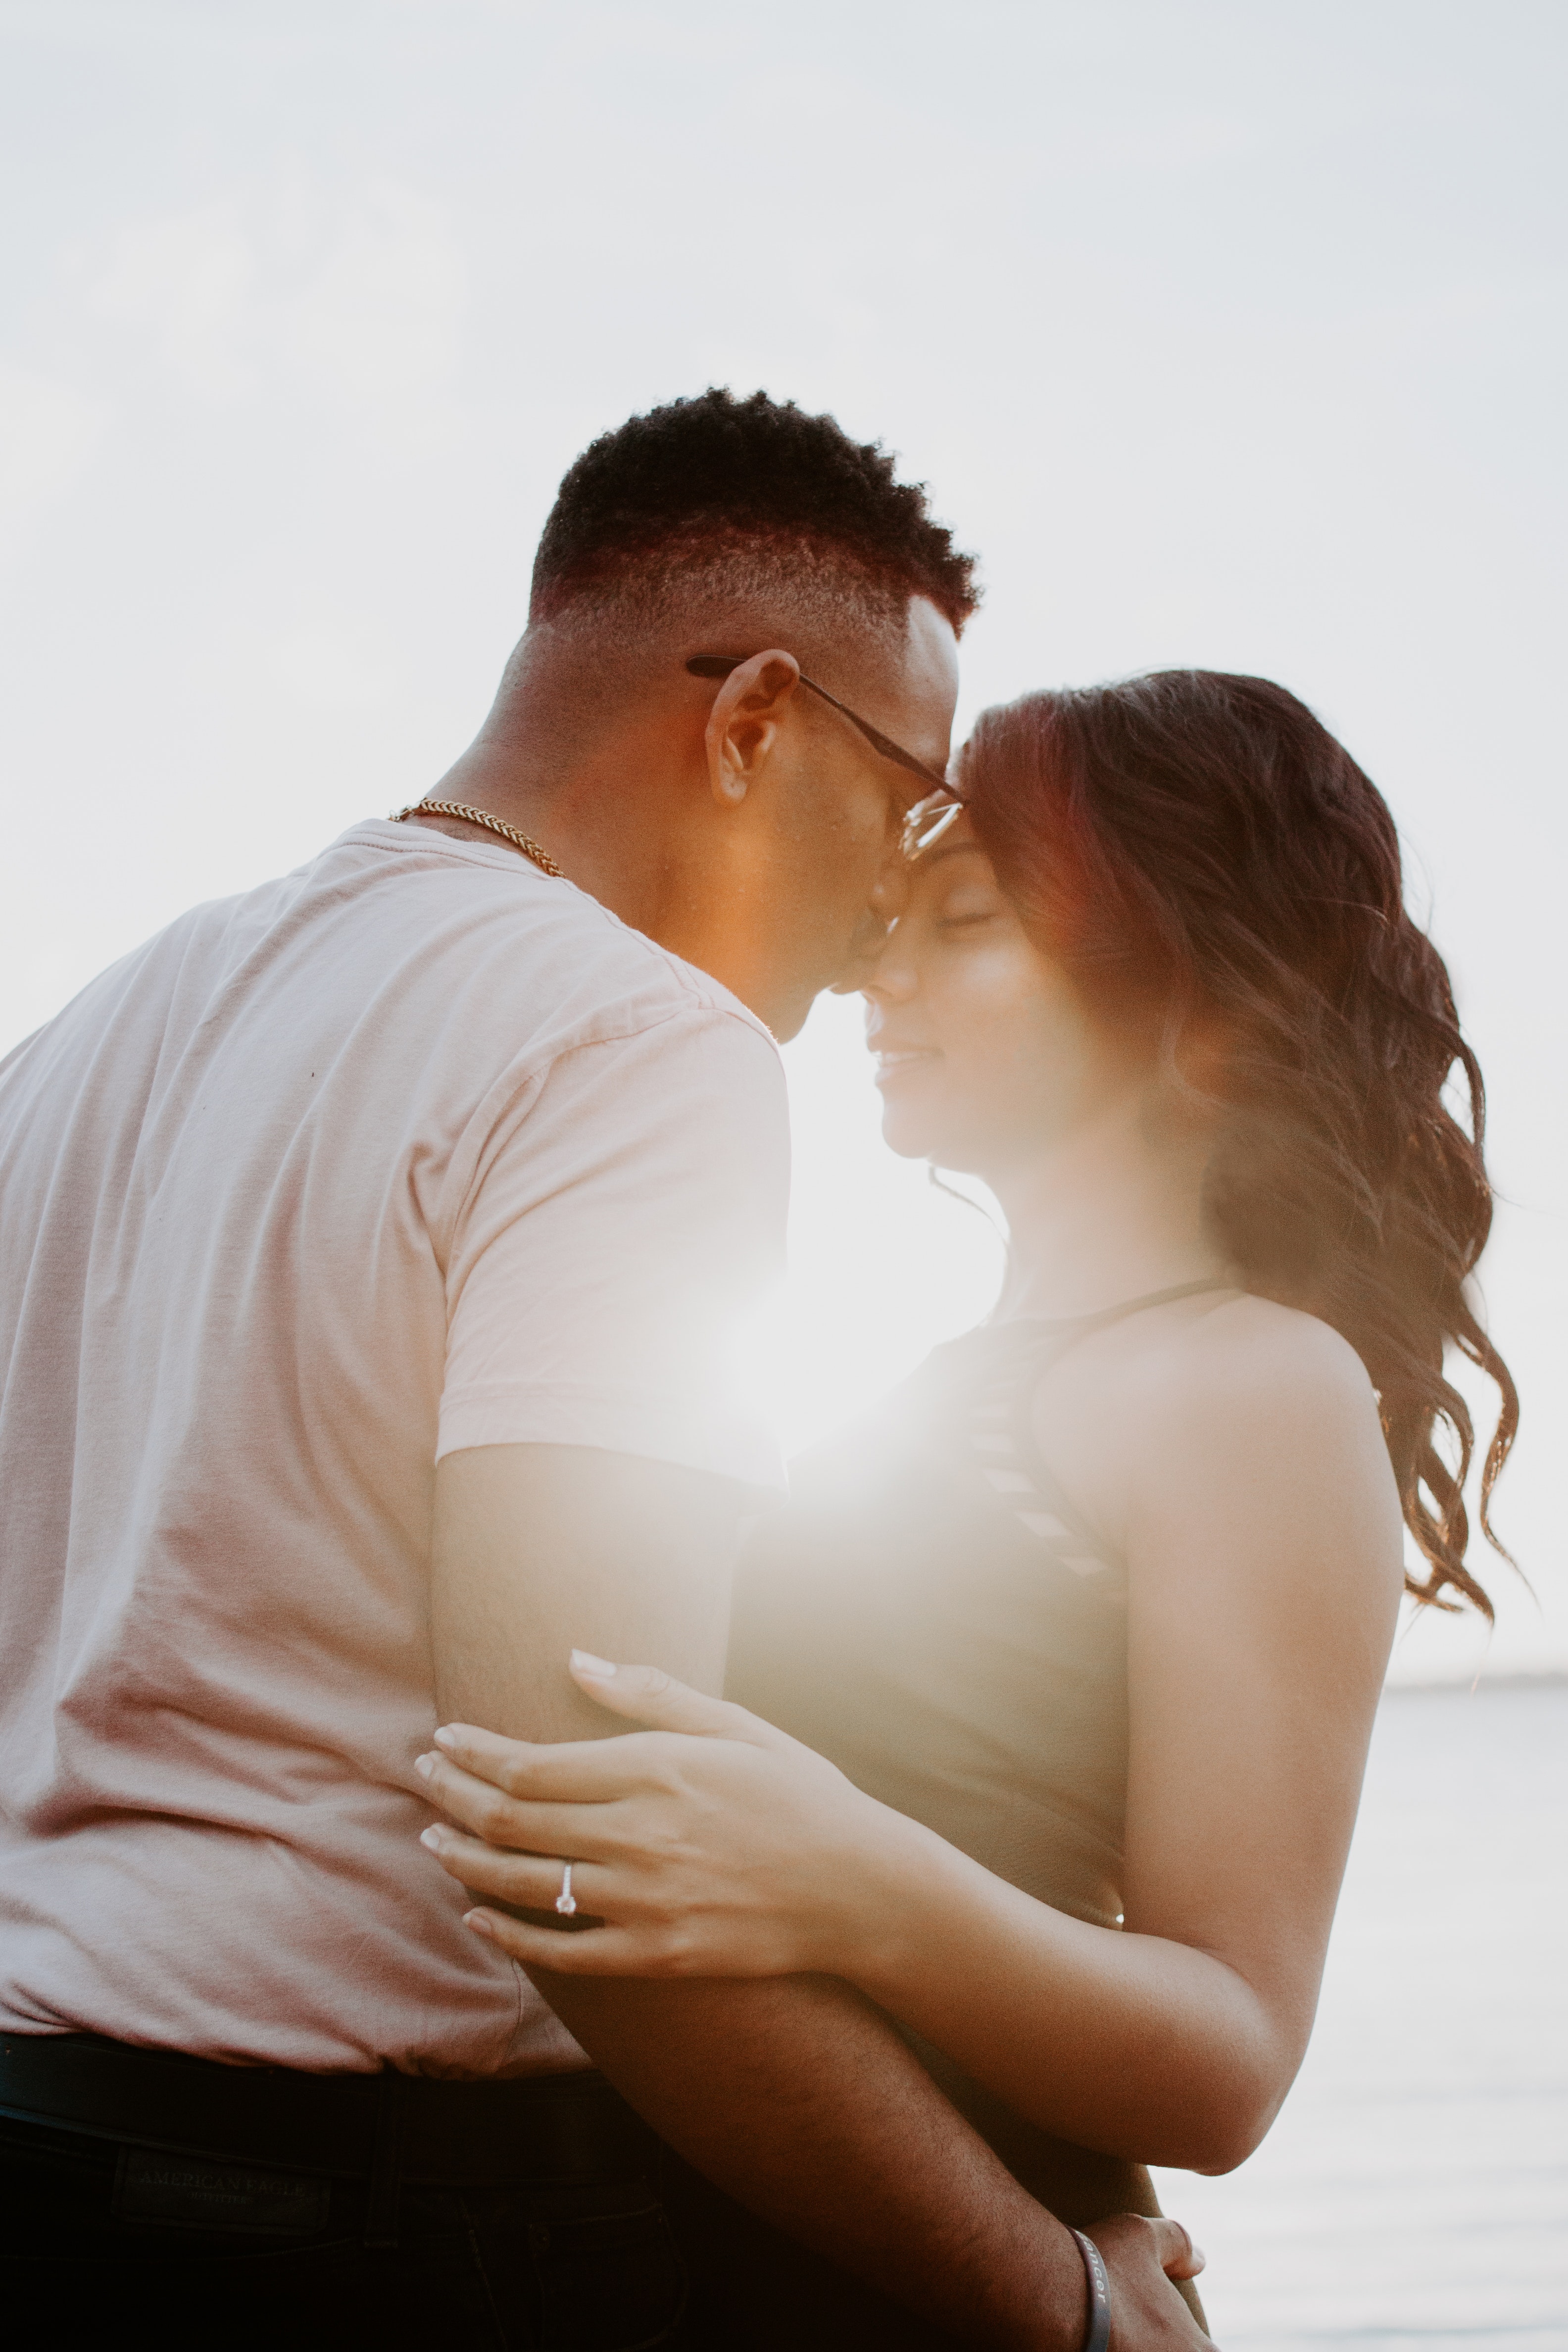 Man wearing white shirt kissing woman in her nose photo